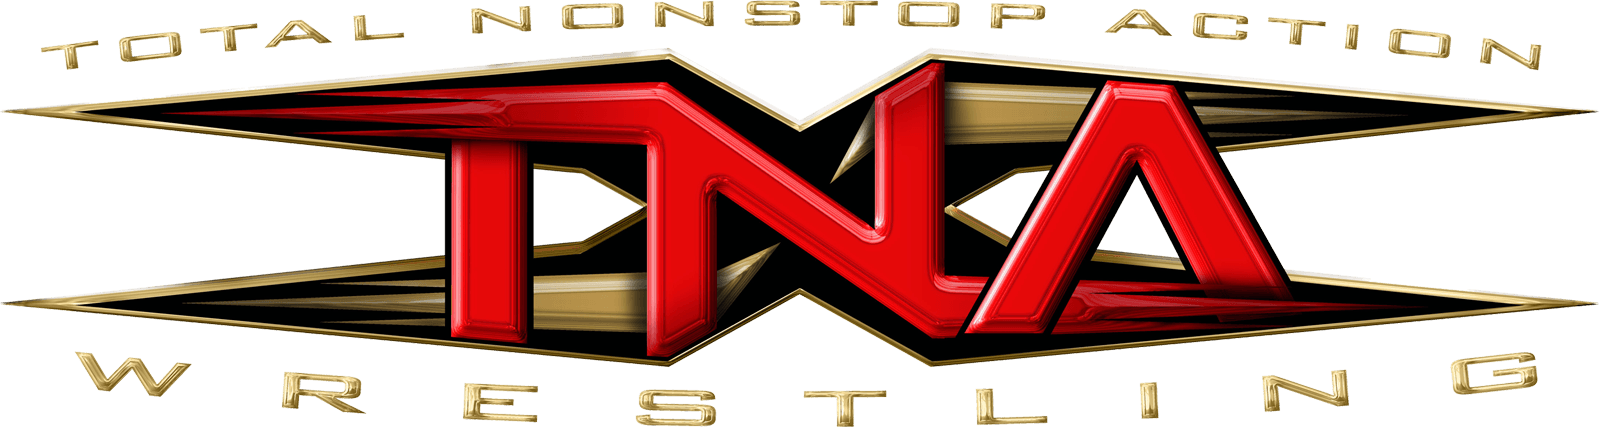 TNA Logo - Impact Wrestling (company)